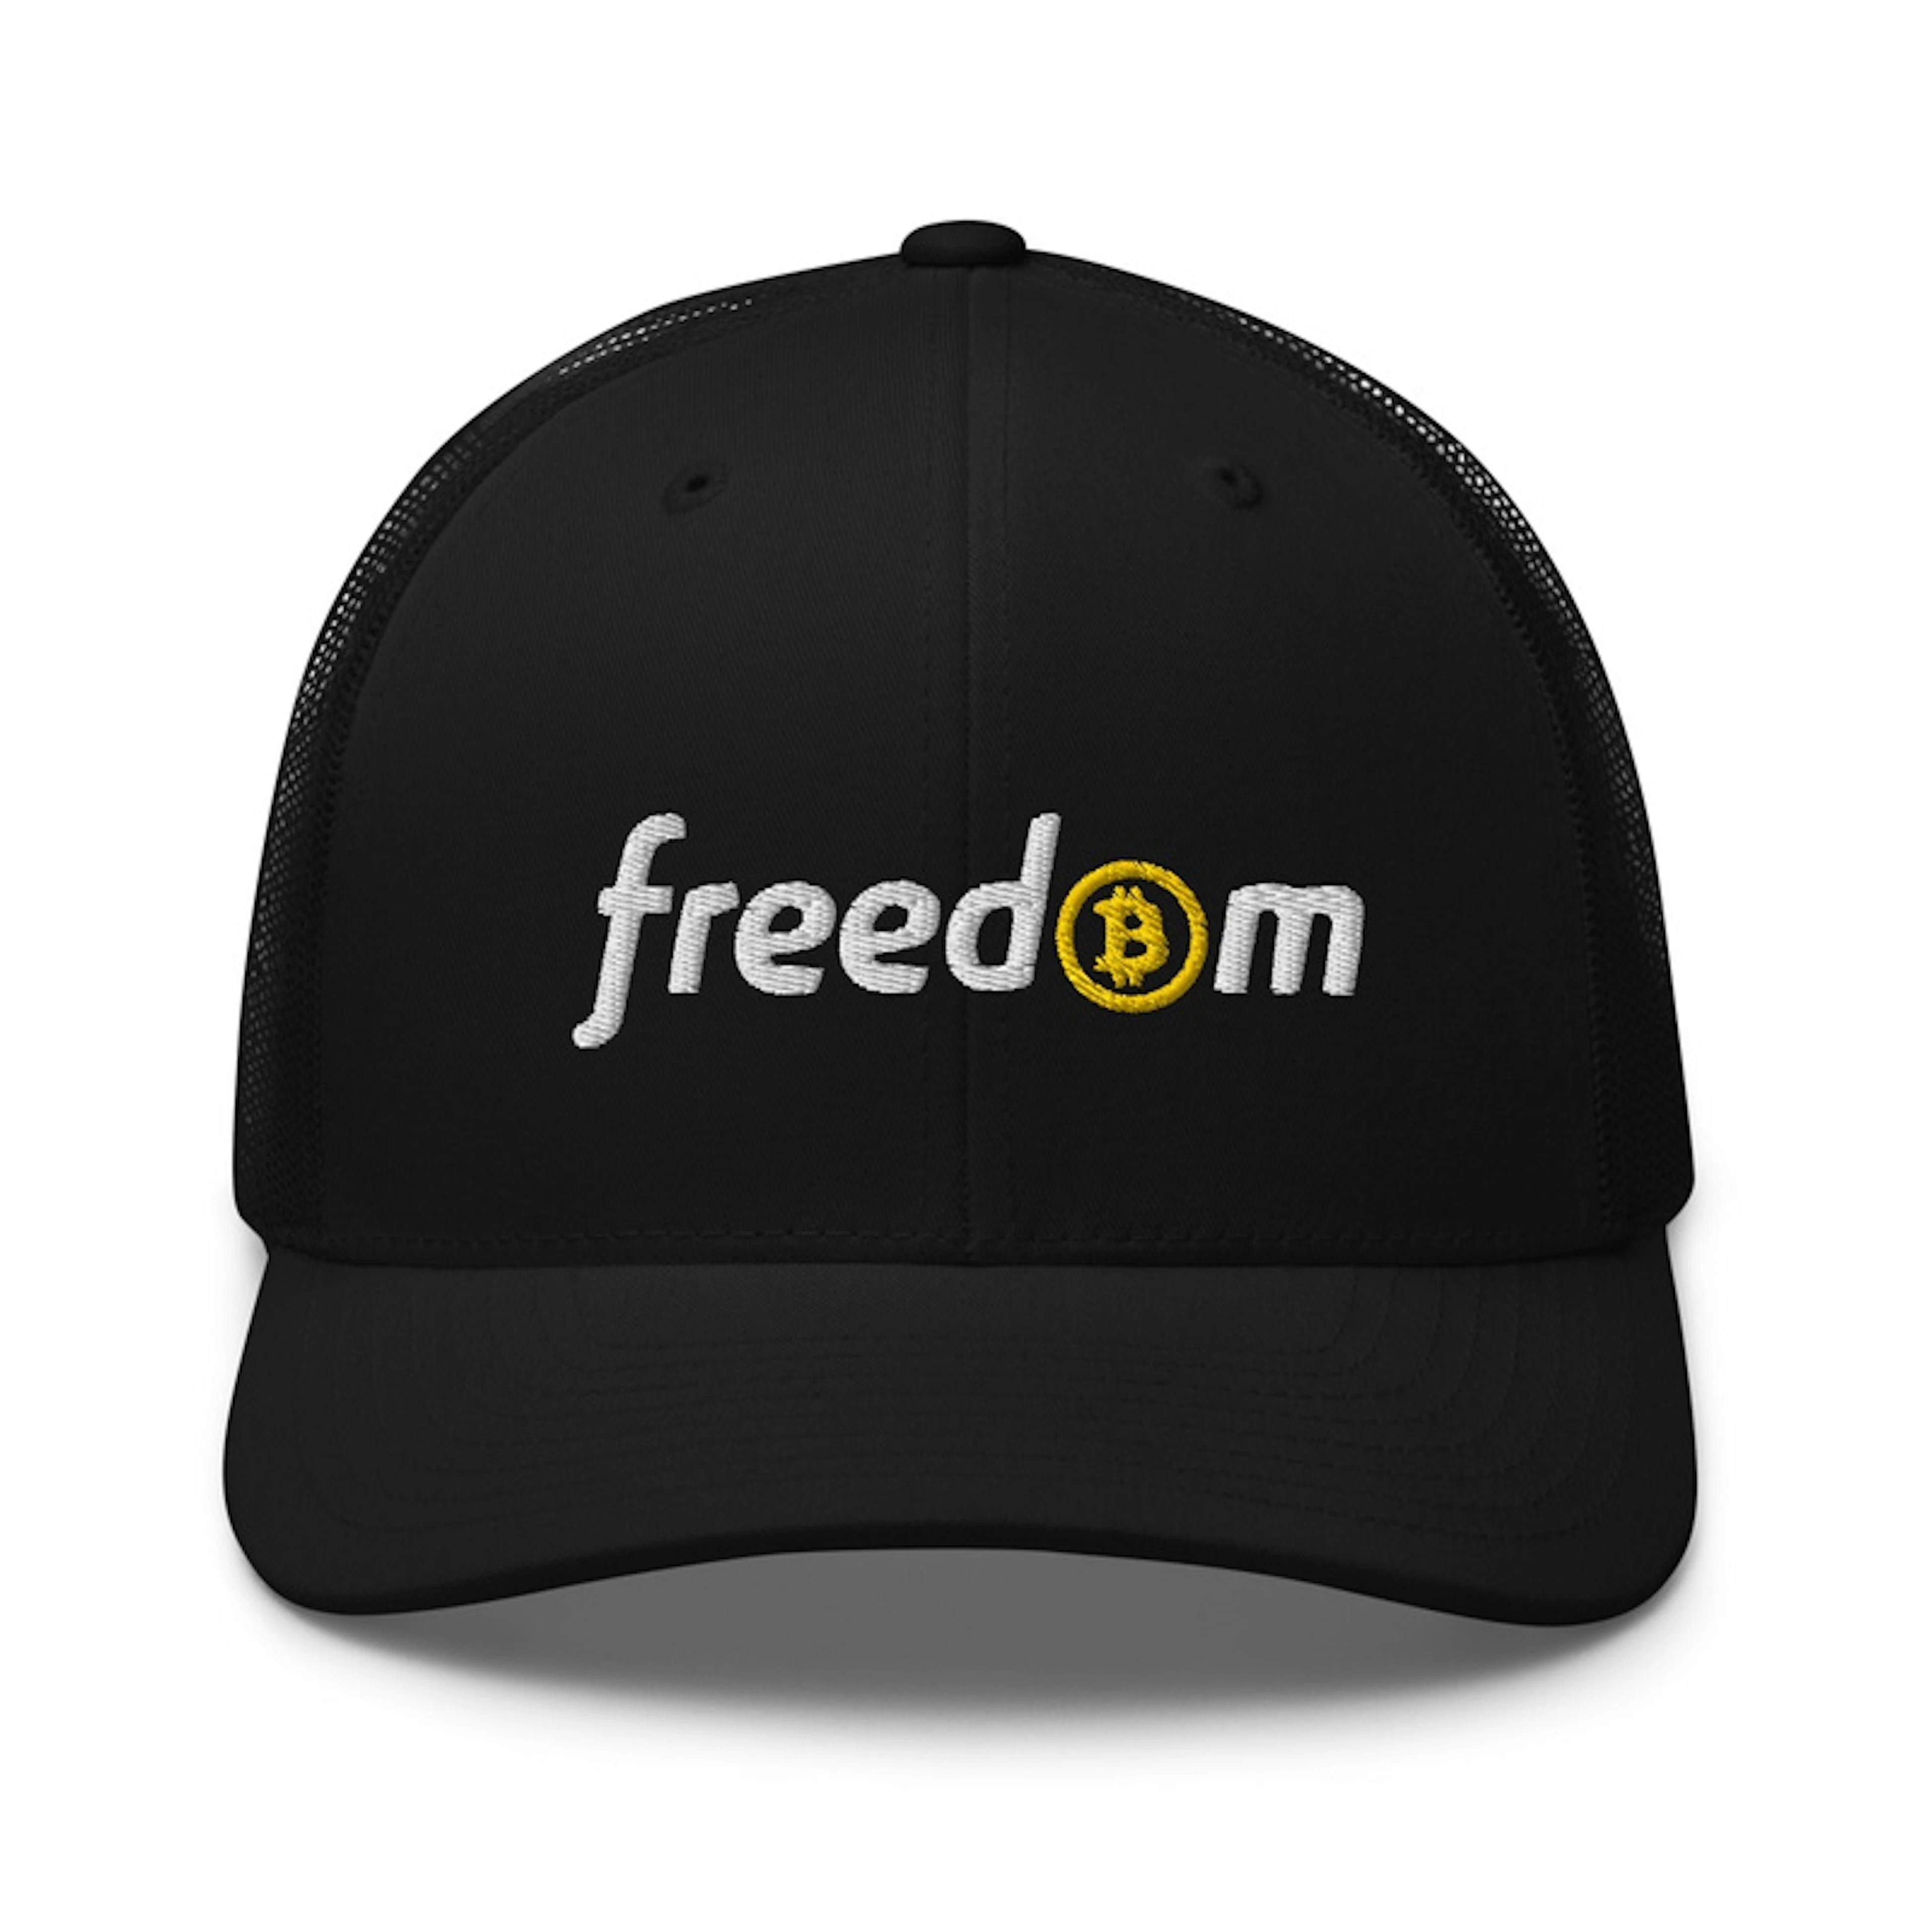 Bitcoin Freedom Trucker Cap